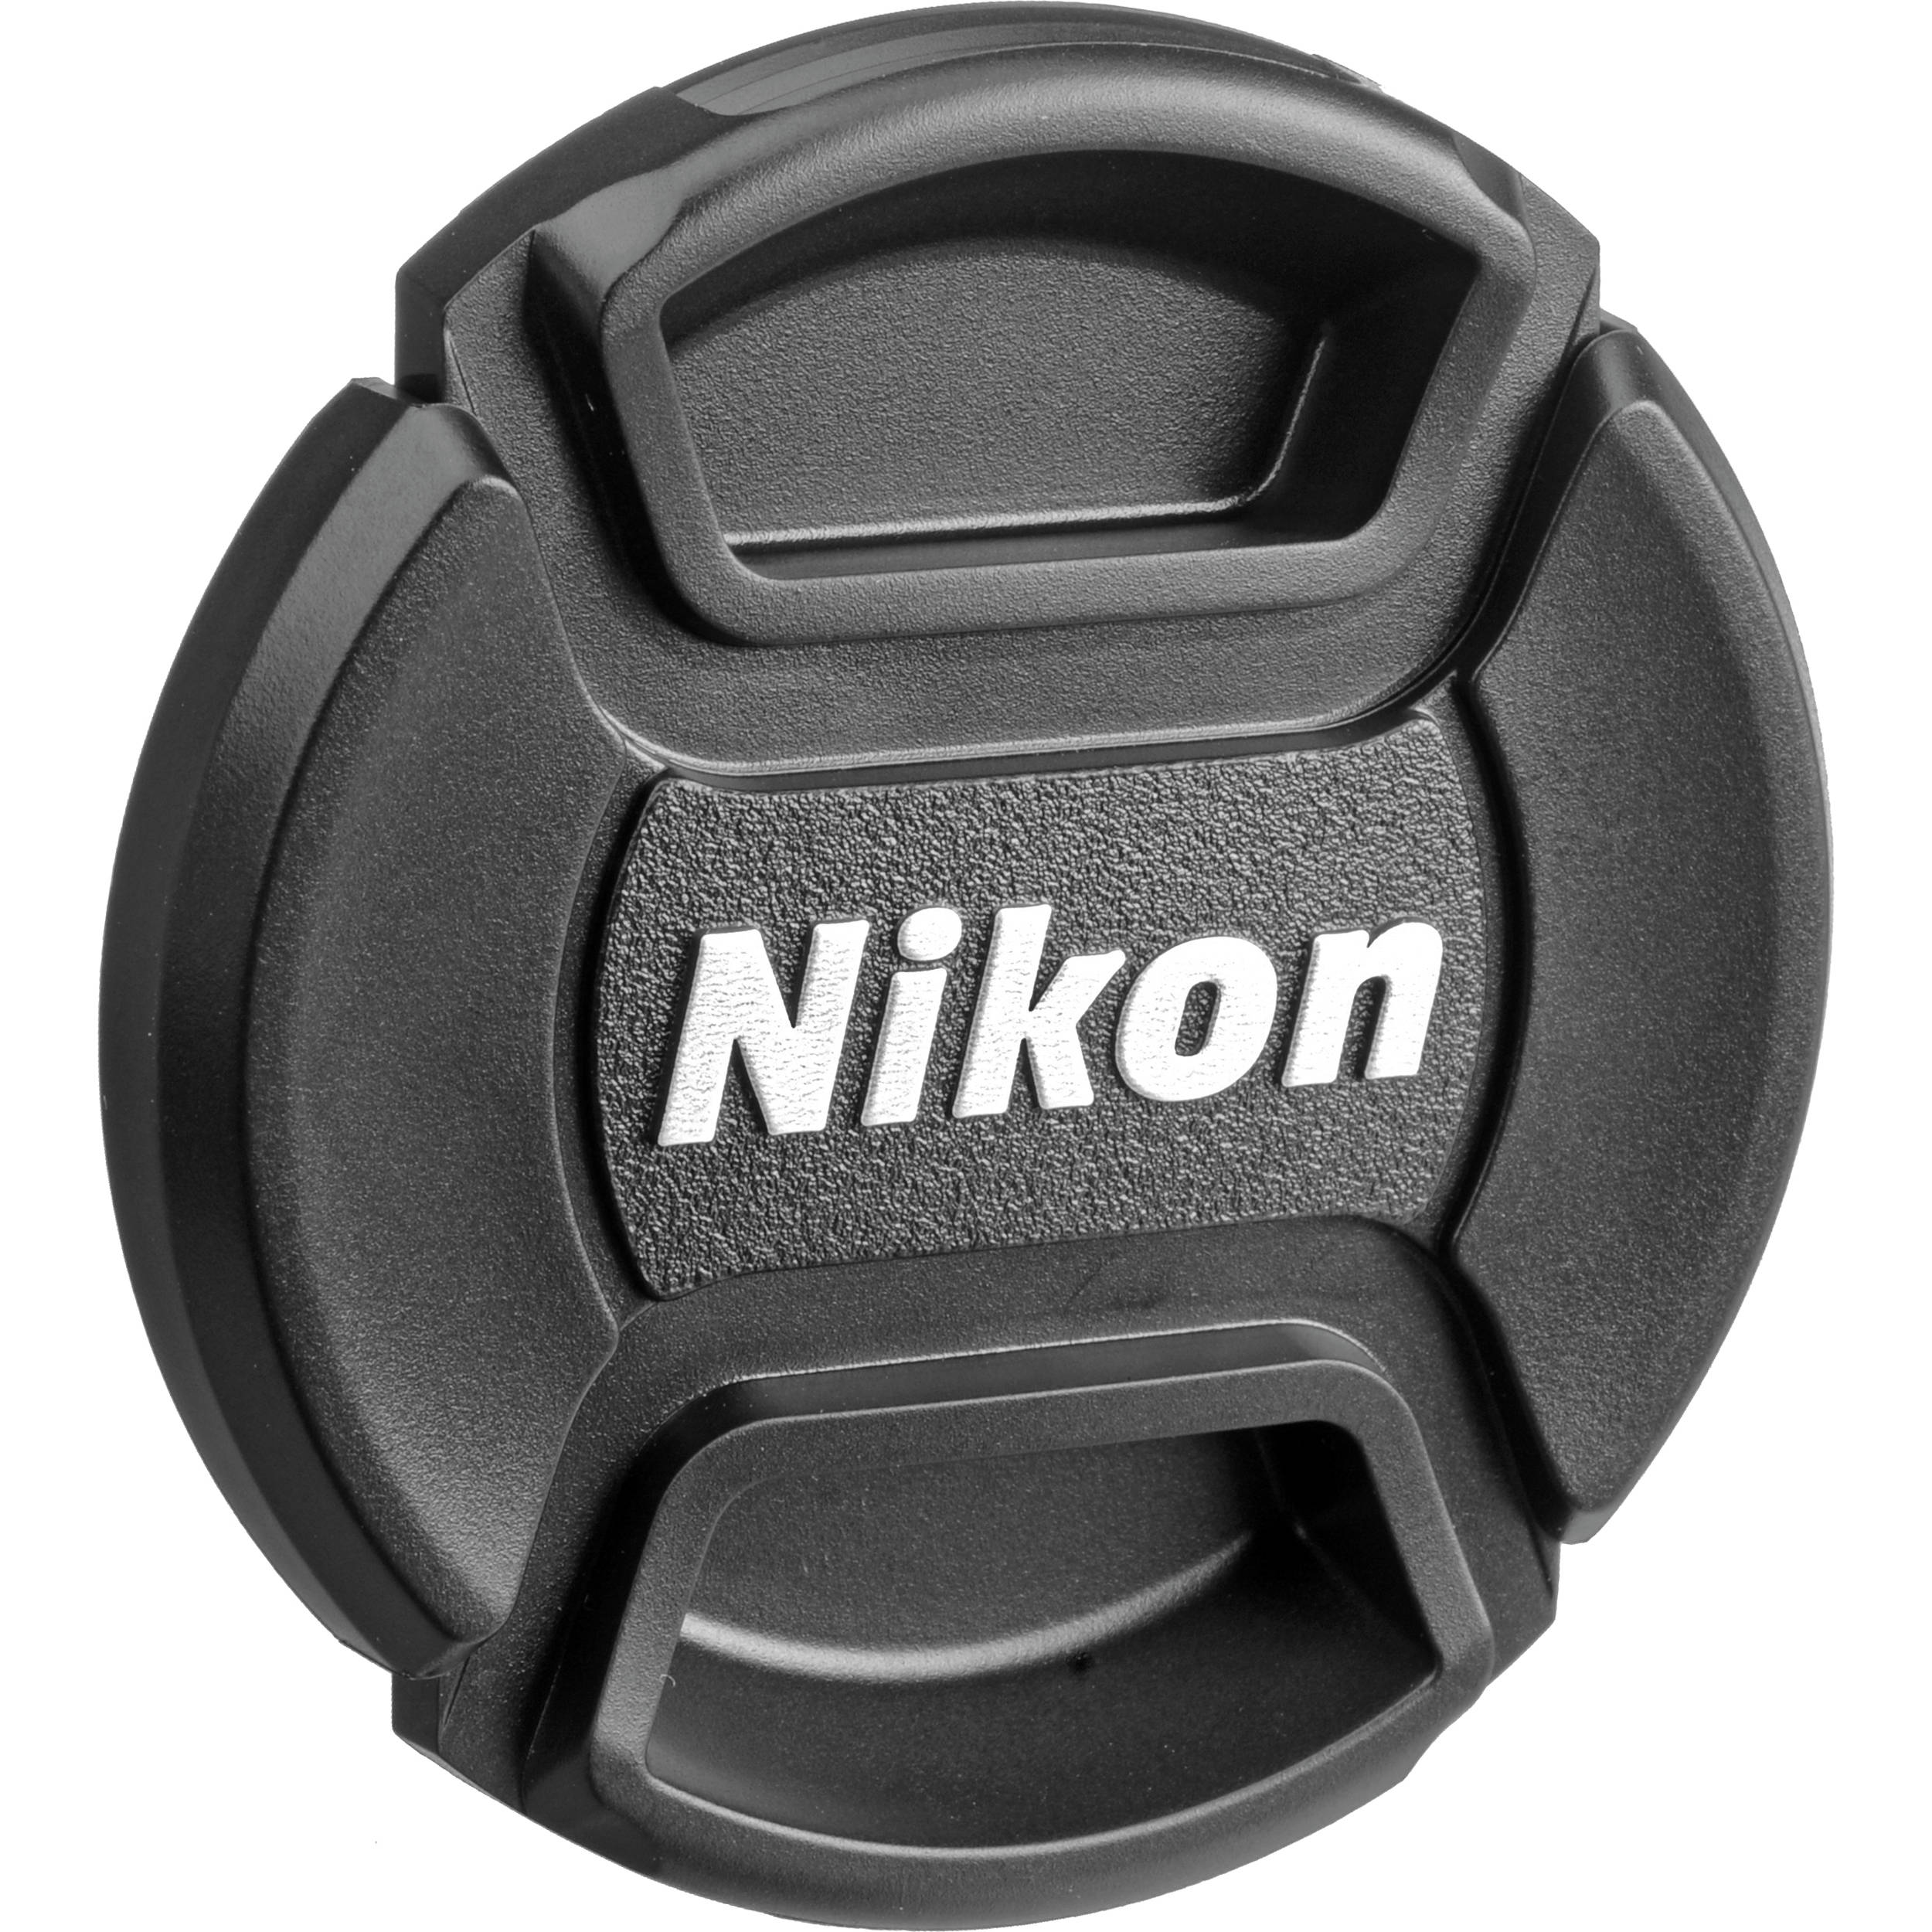 Nikon Nikkor 18 35mm F 3 5 4 5d Ed If Autofocus Lens 1998 B H